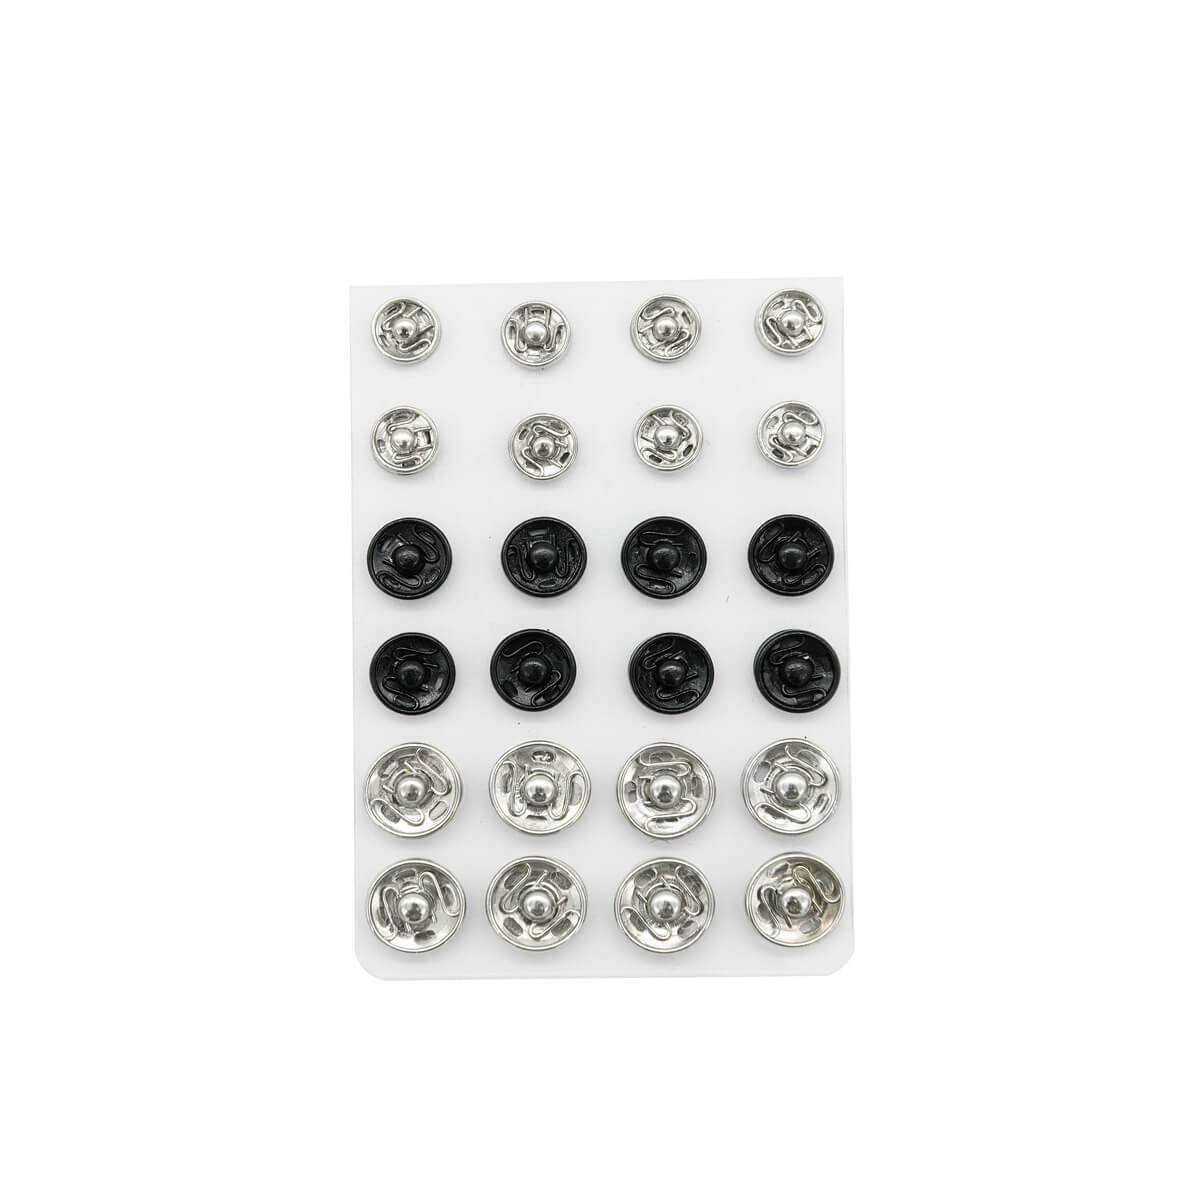 Кнопки для легких тканей ассорти, цвет Серебро, фото 1